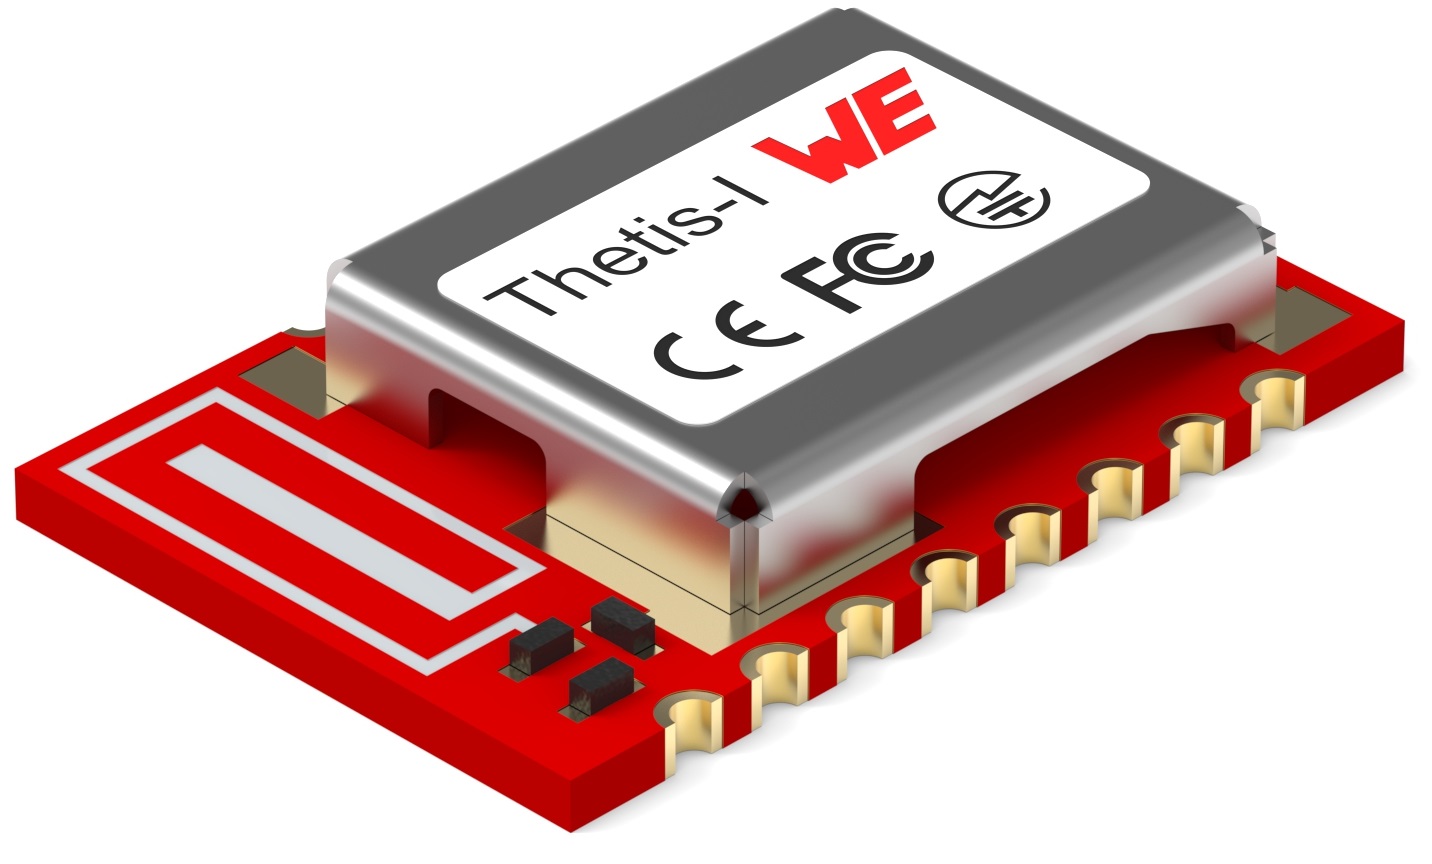 Würth Elektronik Thetis-I (Radio Module Wirepas IoT Netwerk)